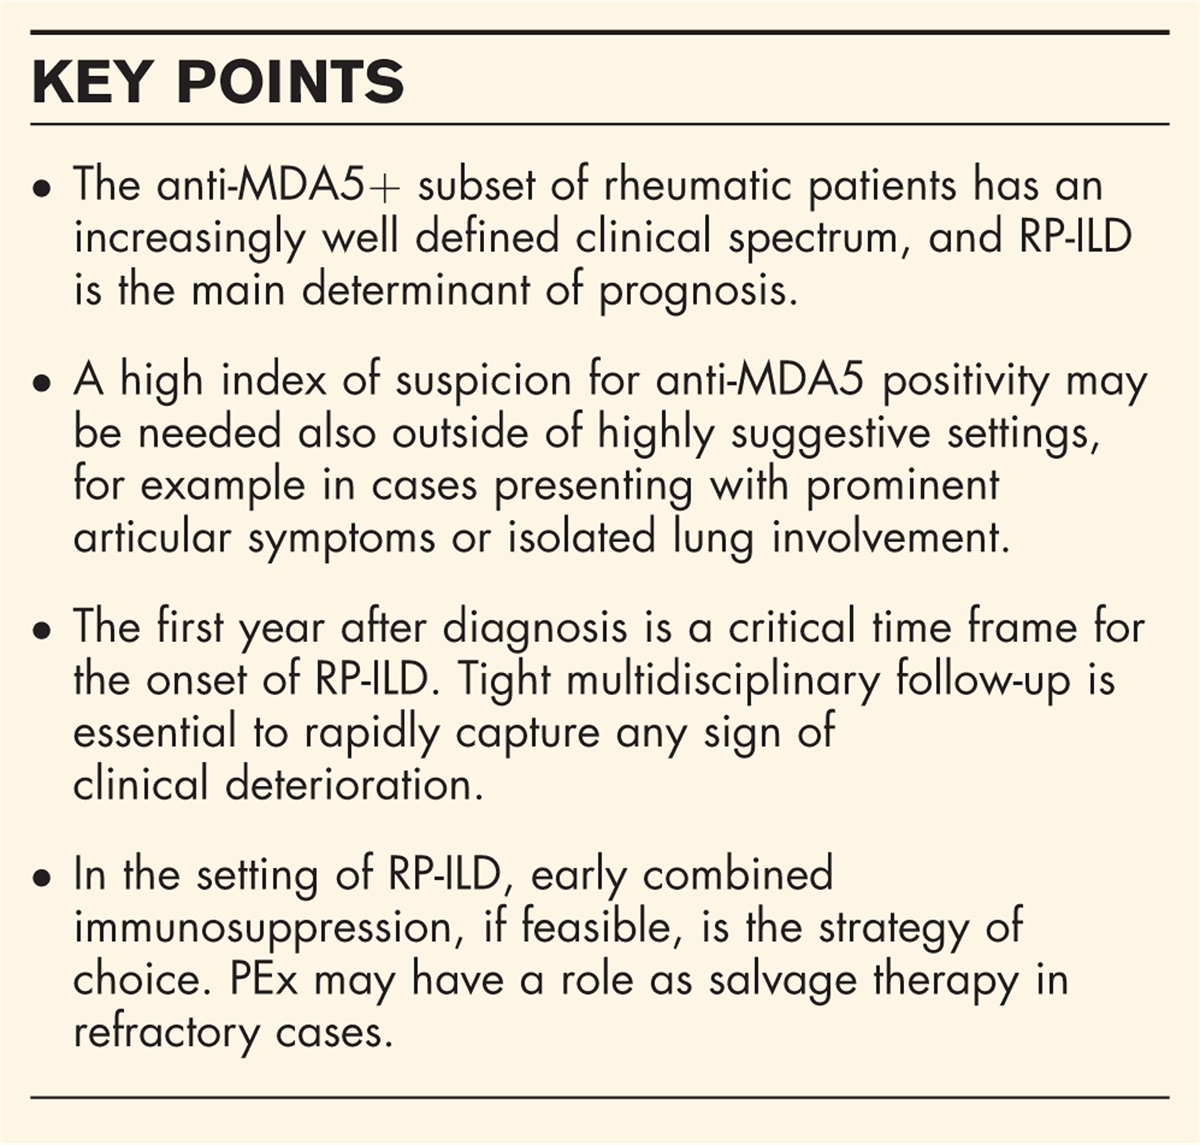 Anti-MDA5 dermatomyositis: an update from bench to bedside